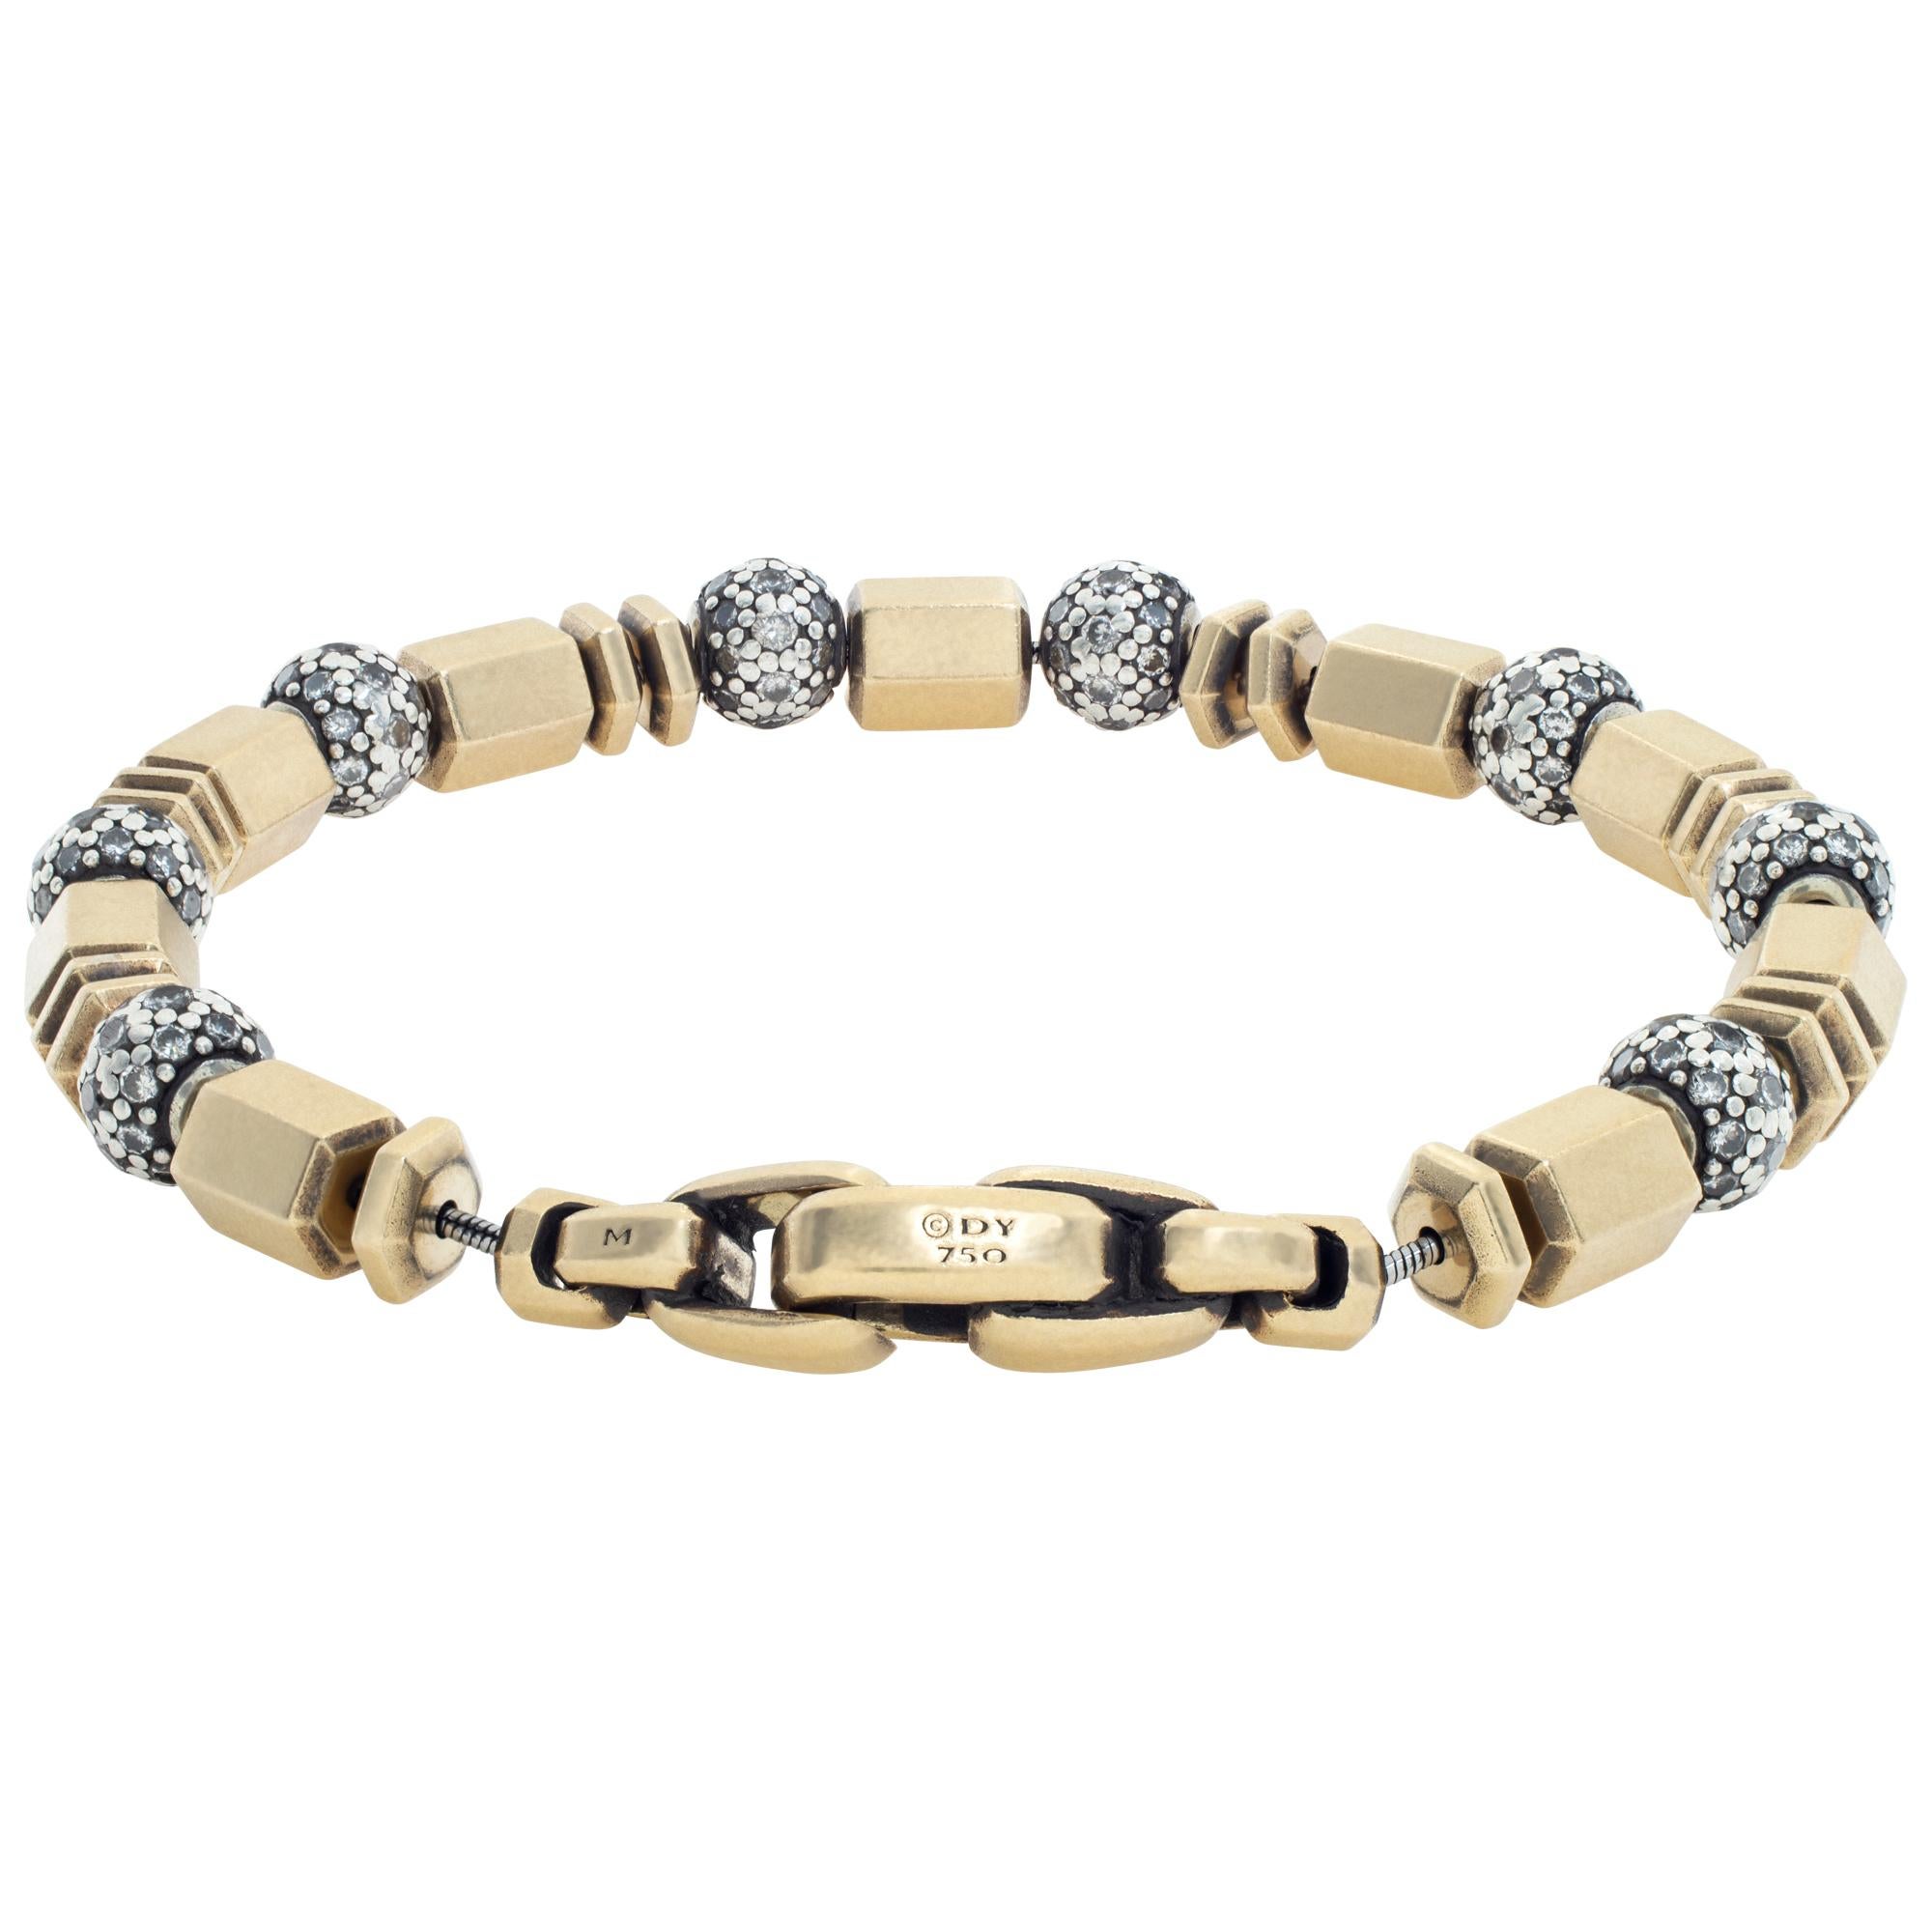 David Yurman Spiritual Bead bracelet in 18k yellow gold with approx. 4.54 carats pave diamonds. 7.25 inch length. Comes with David Yurman appraisal.